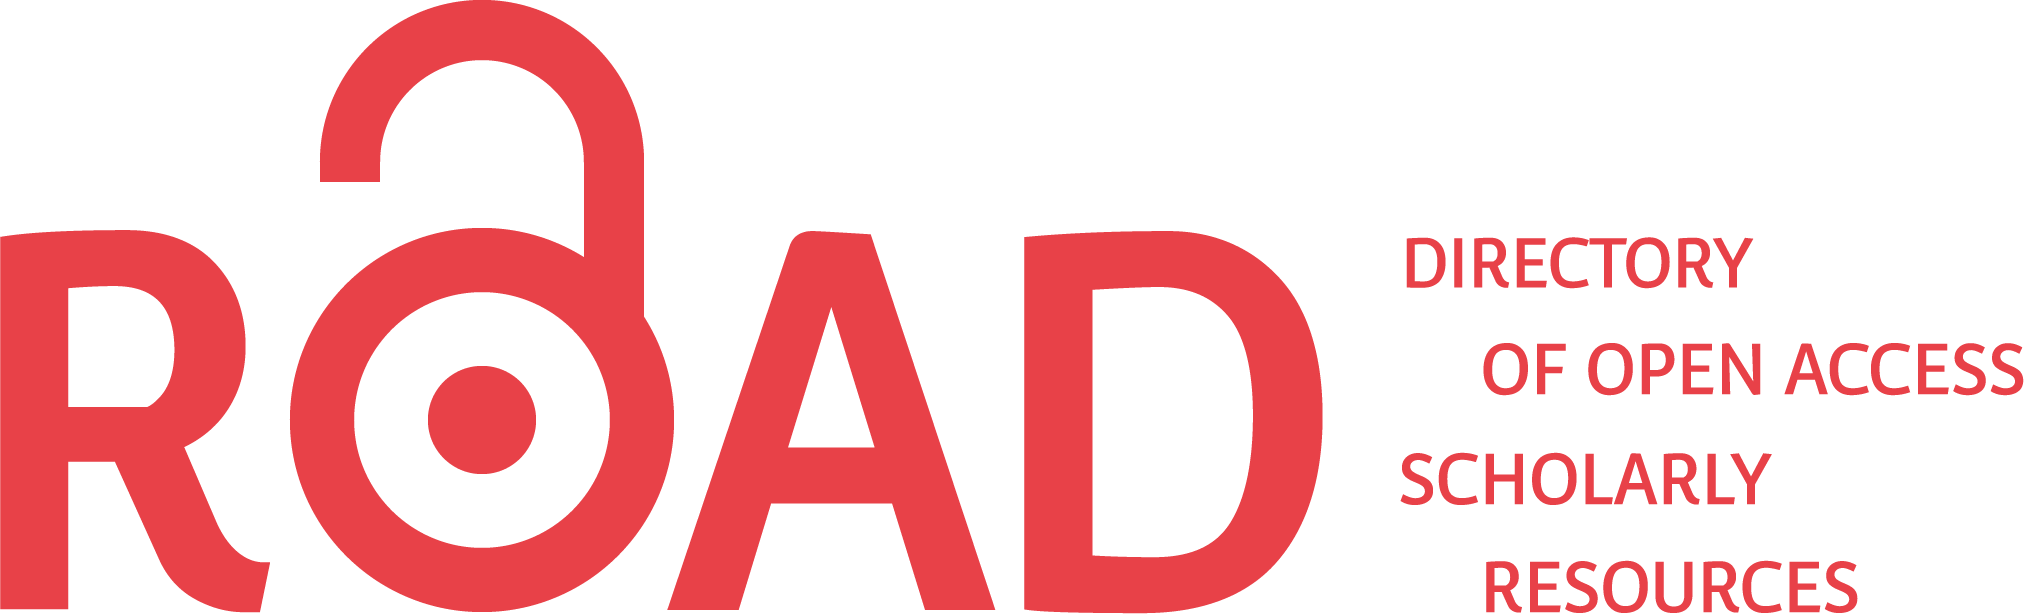 Open access logo. Логотип DOAJ. Открытый доступ. DOAJ баннеры.